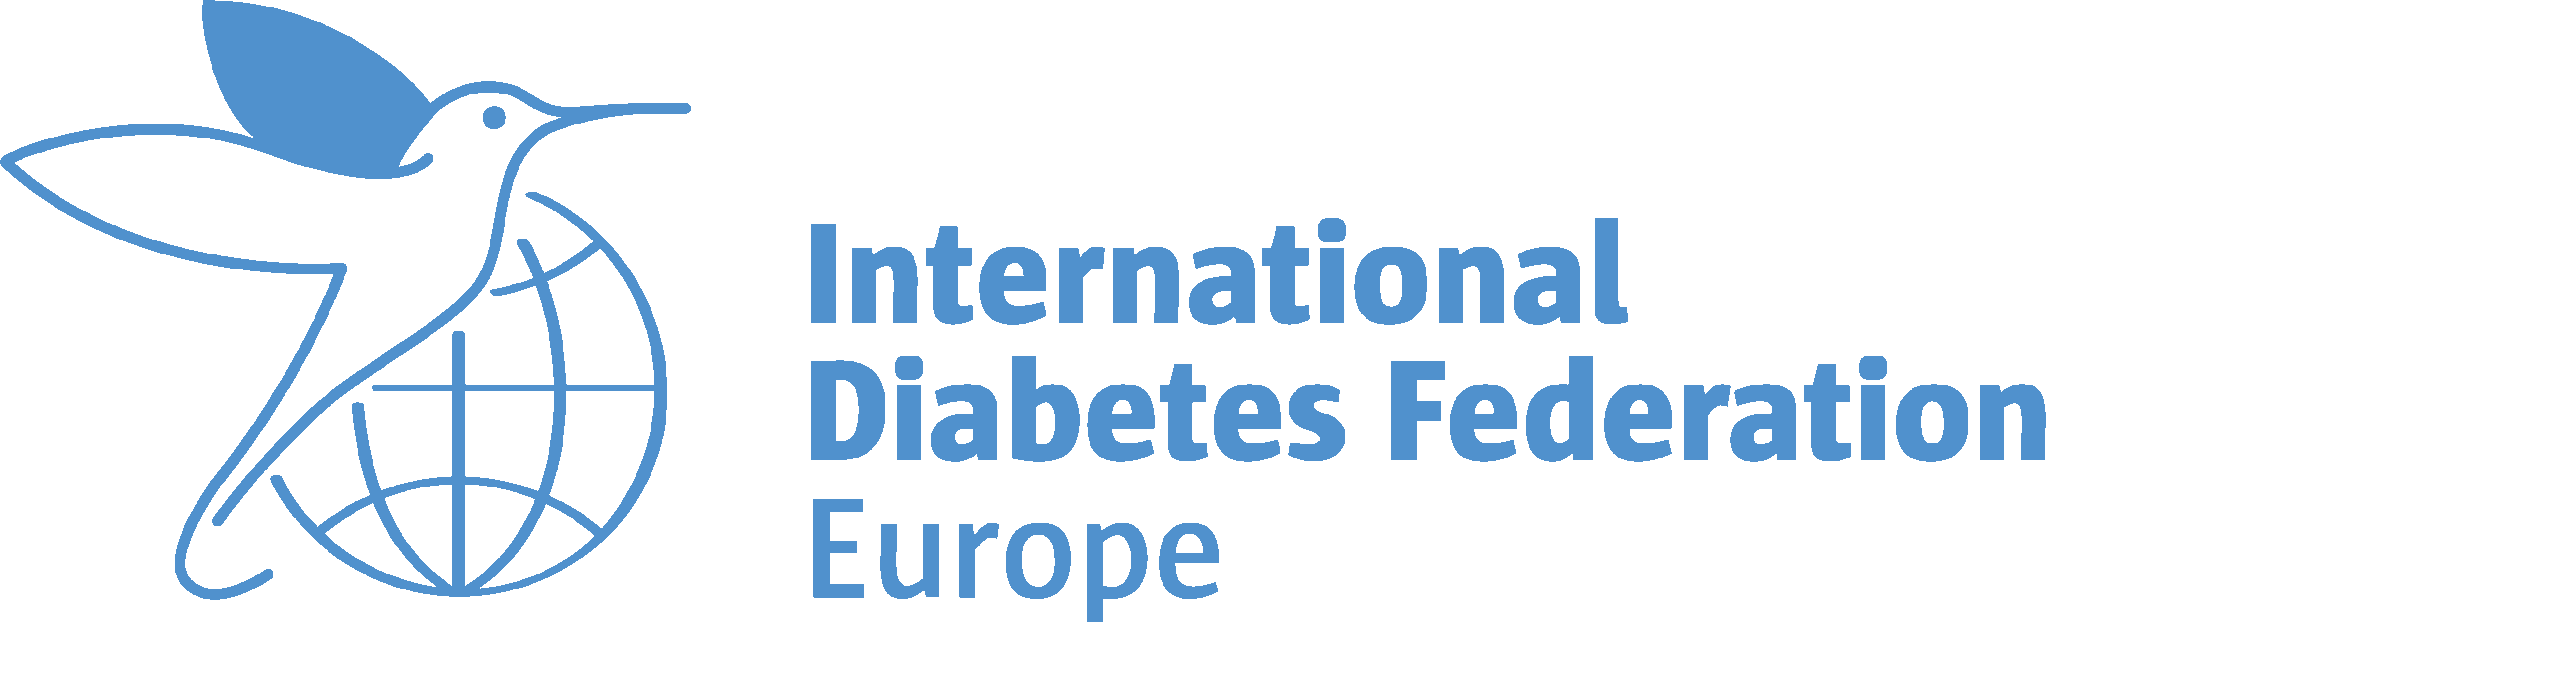 Insulin at 100 - IDF Europe